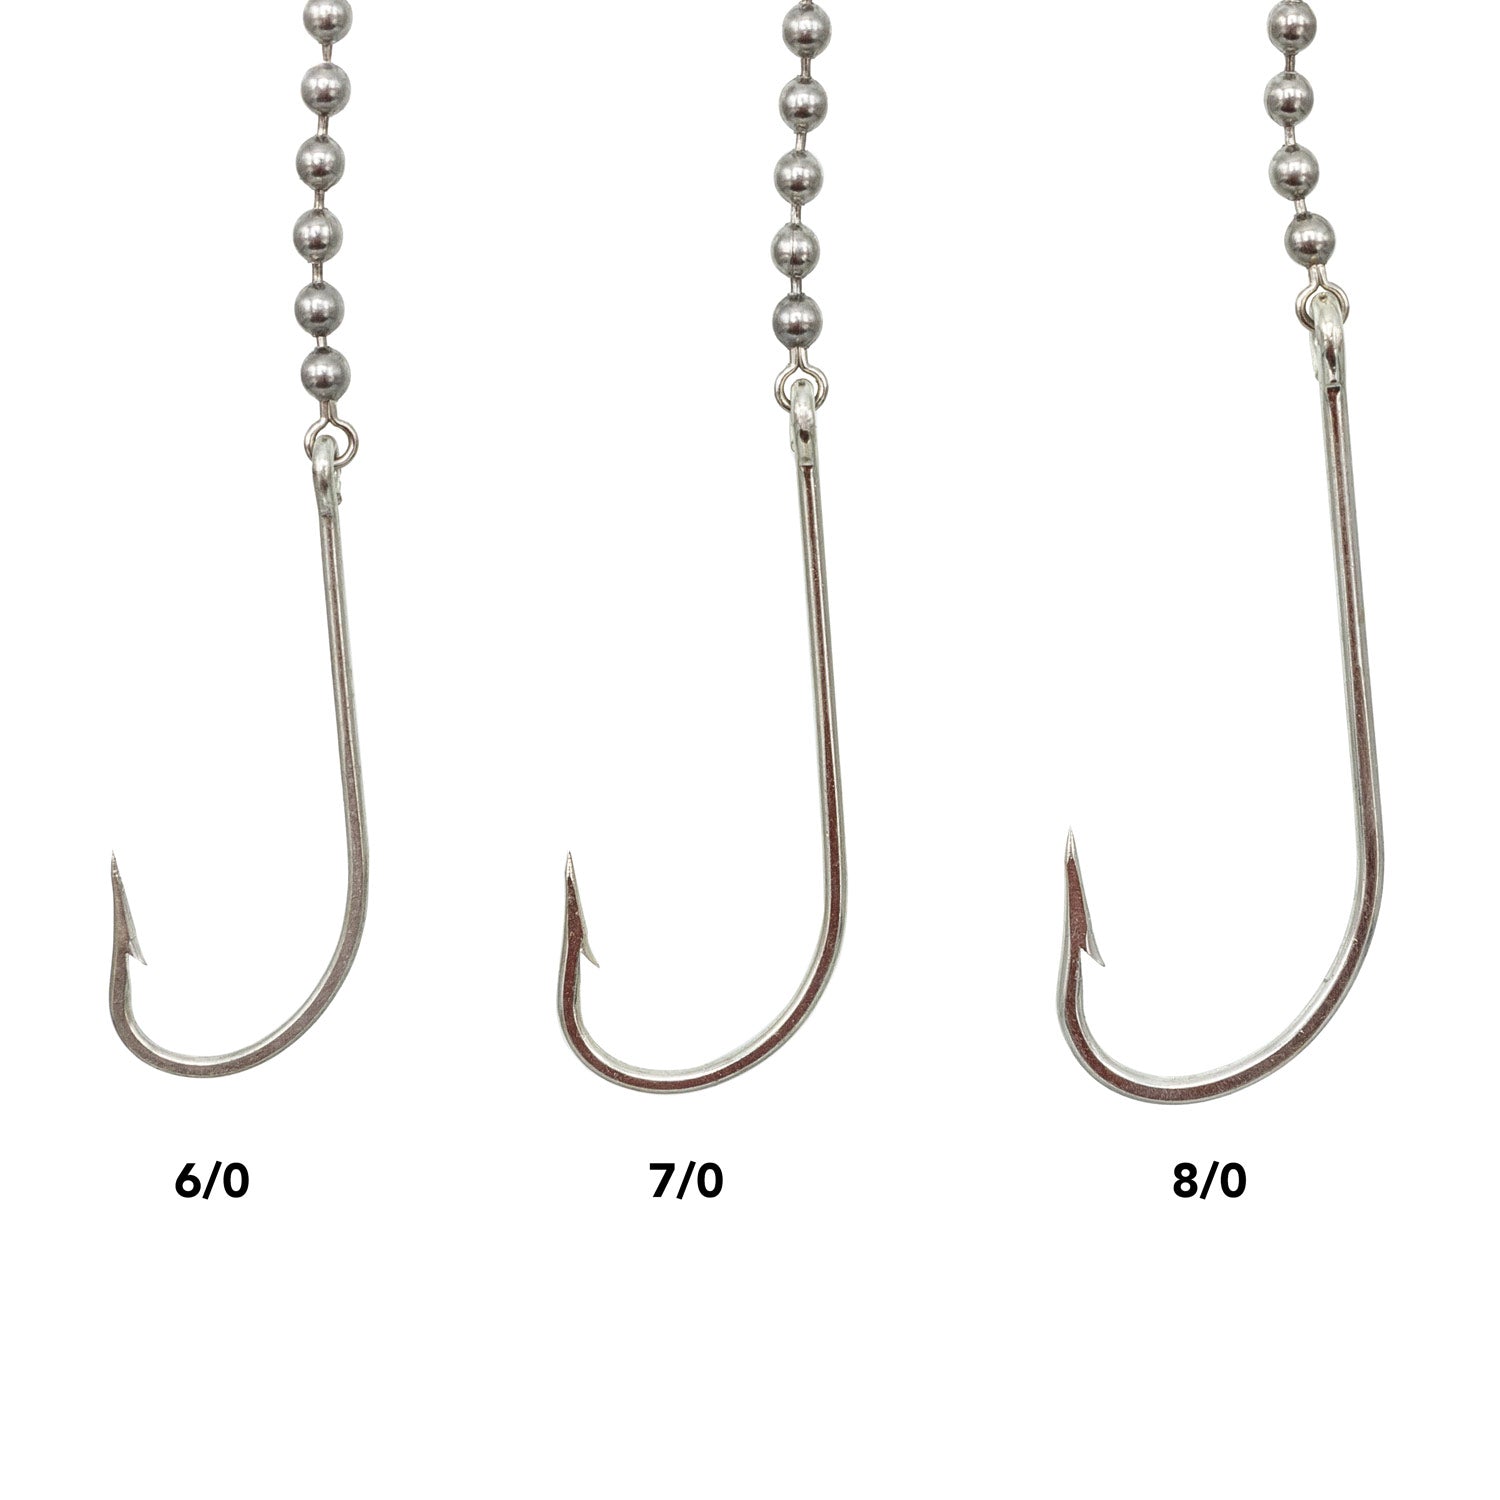 Bead Chain Rigs (2 pack) – Rite Angler